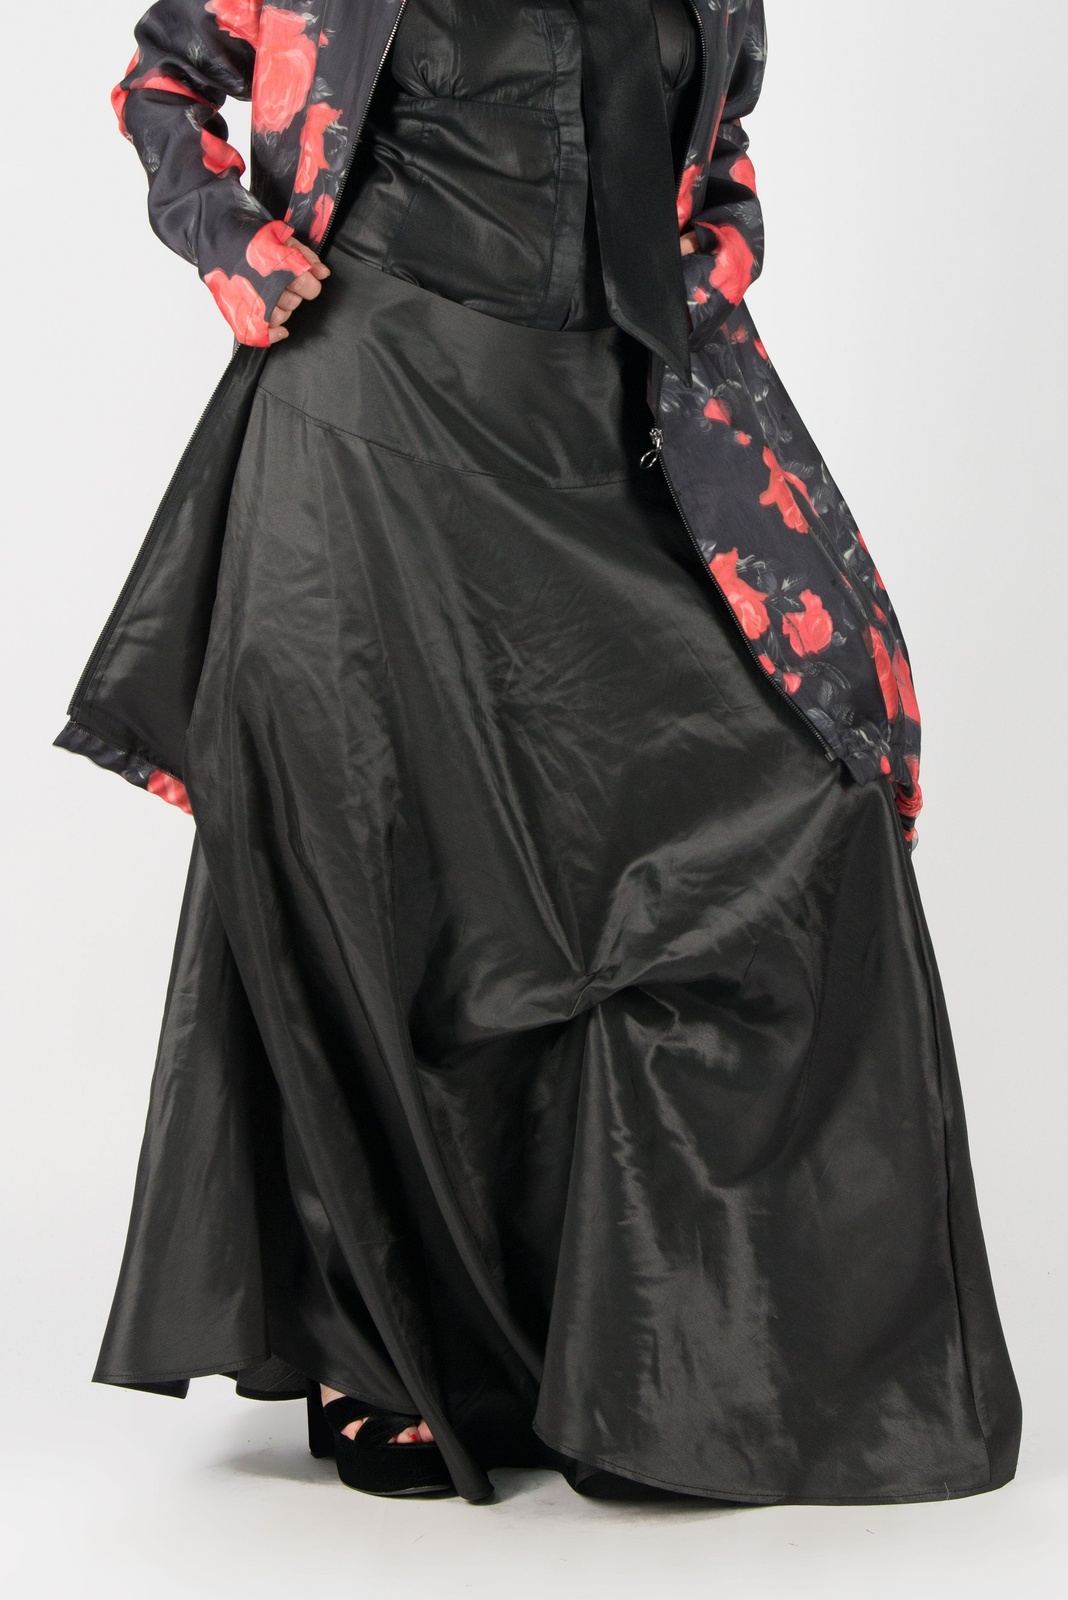 Black Taffeta Stylish Skirt, New Arrival